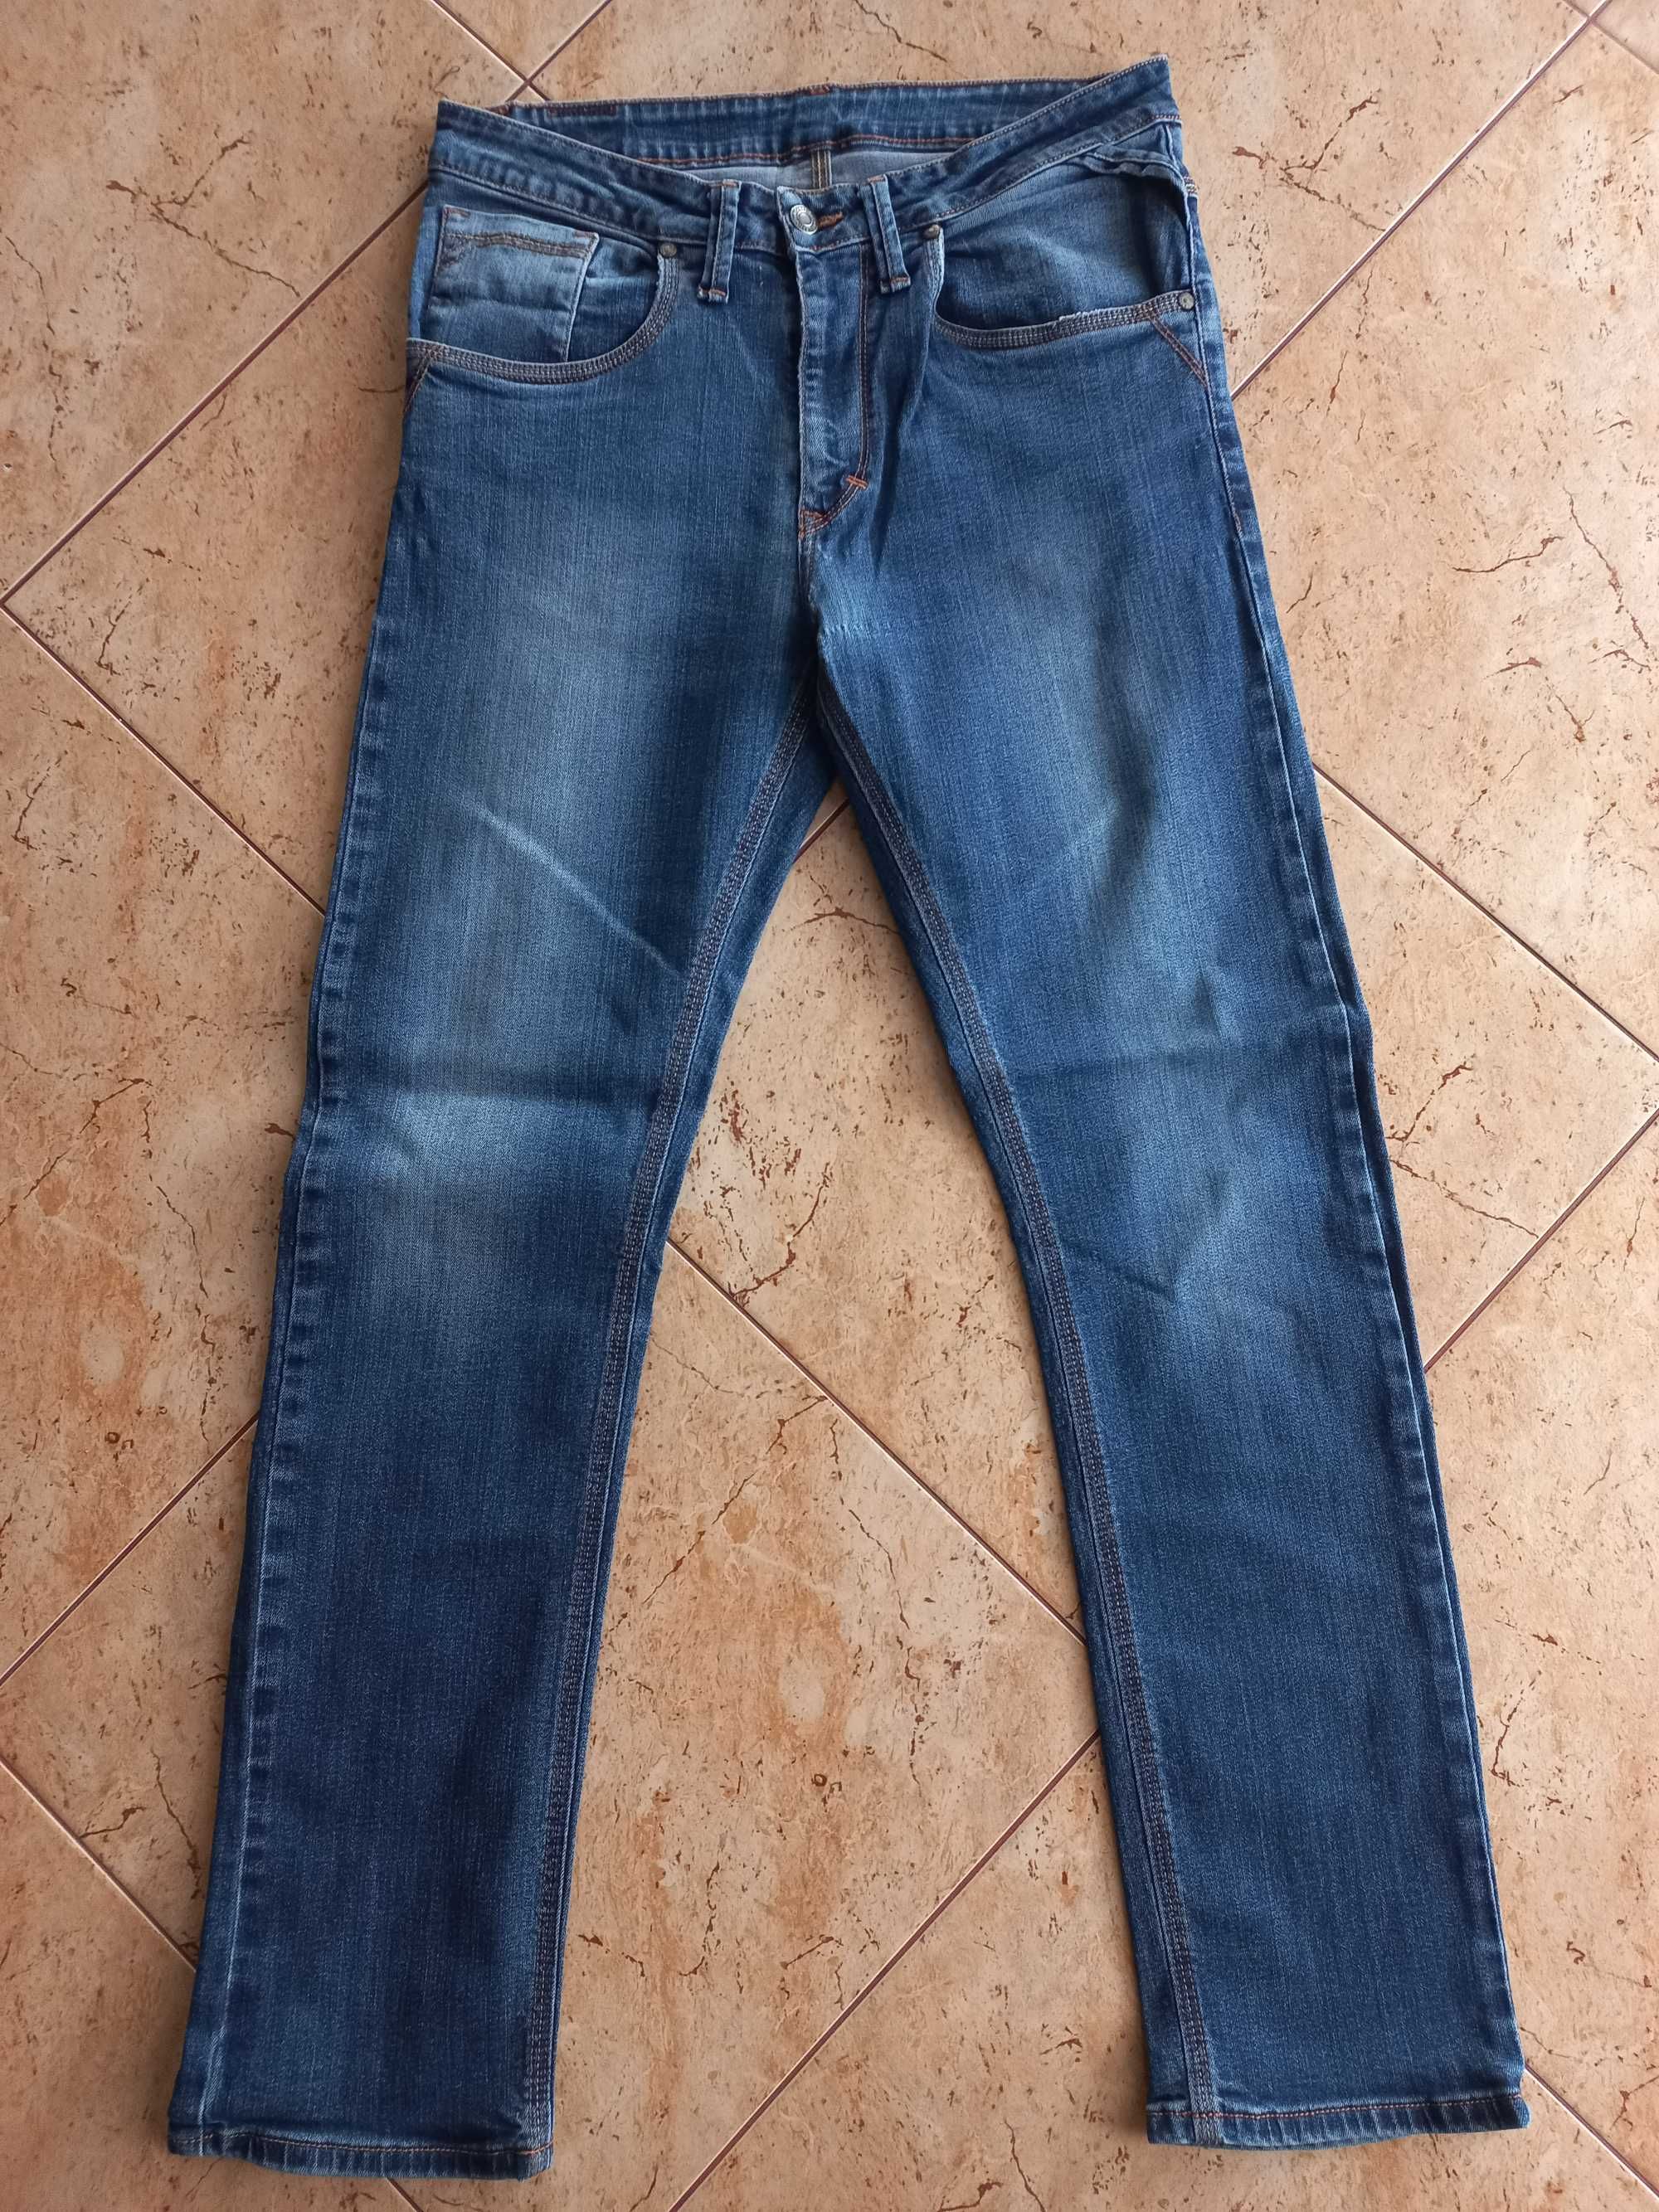 Spodnie jeans rozmiar 32/33